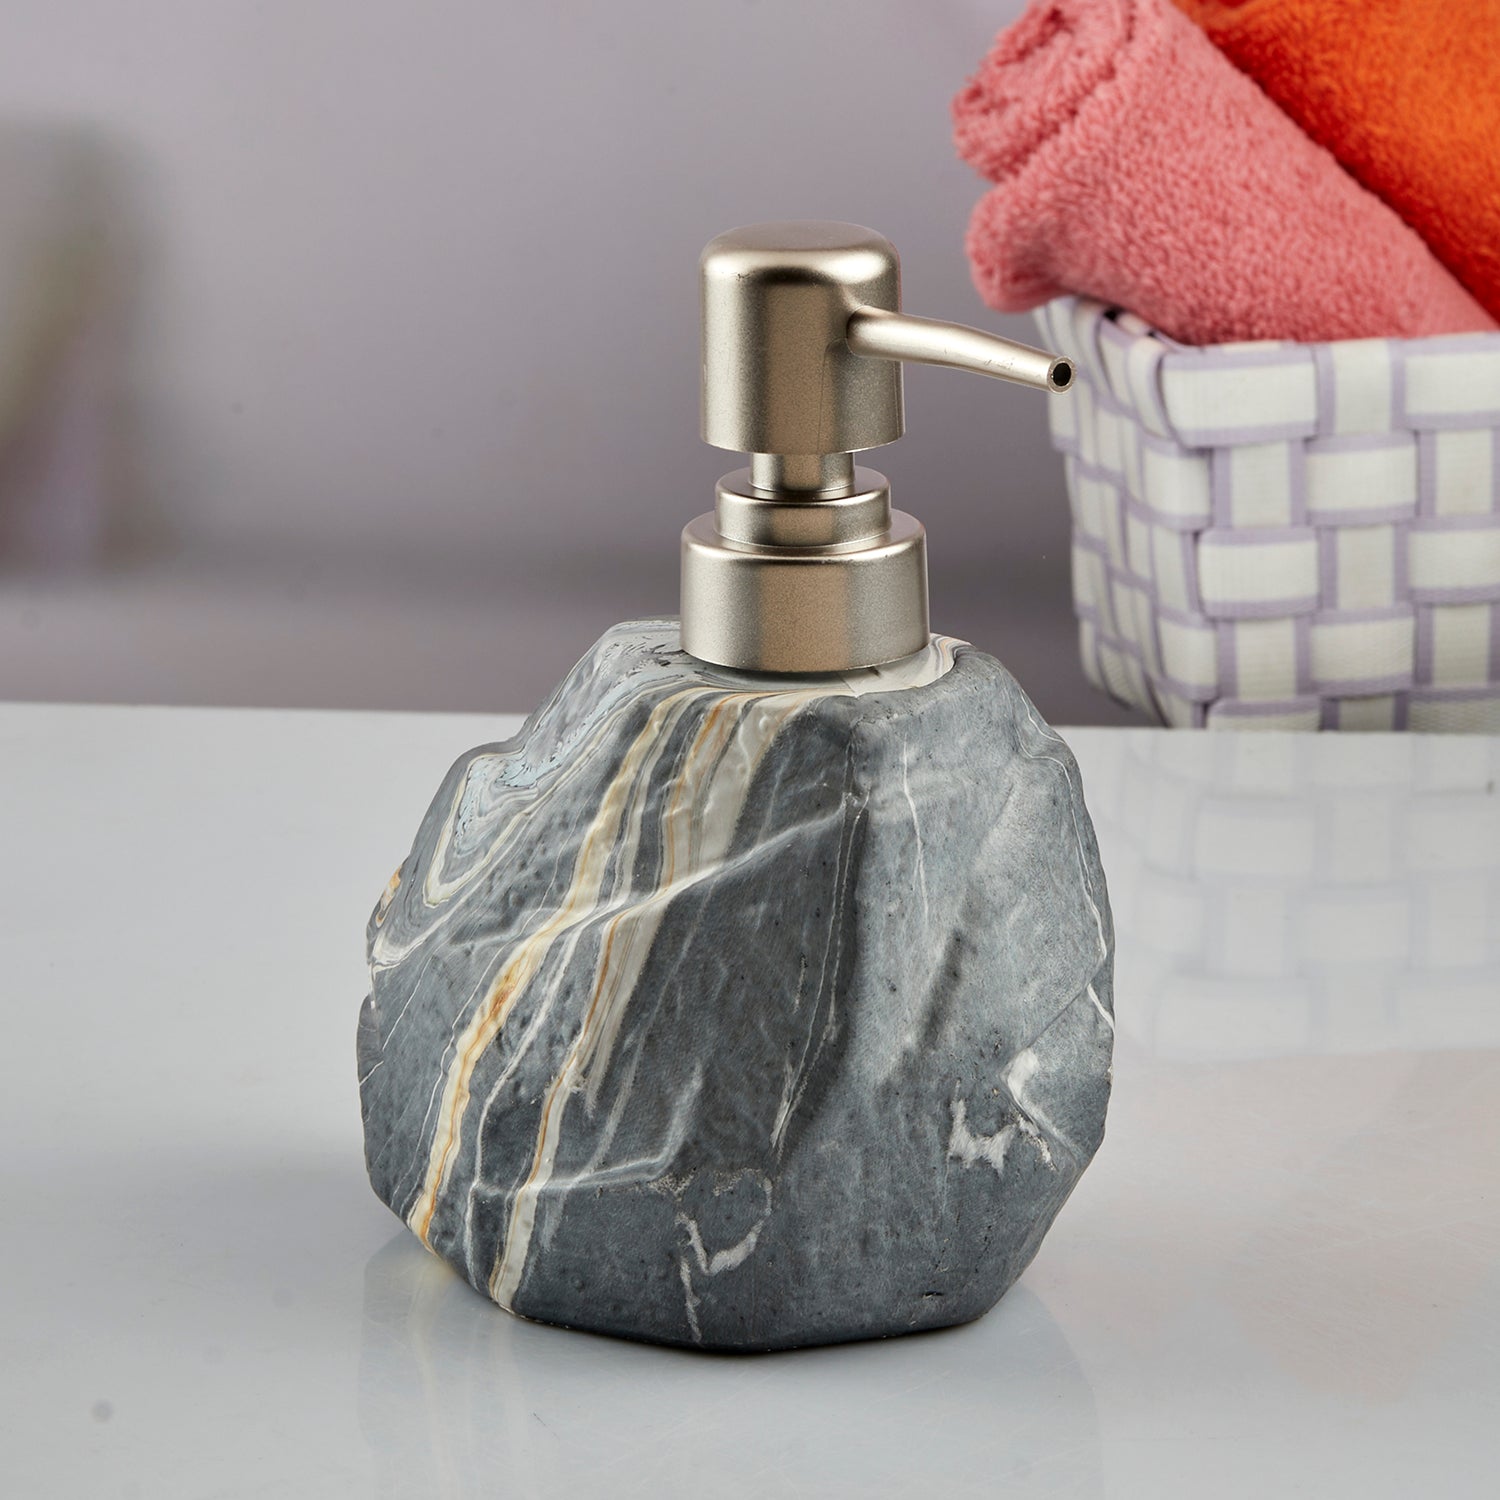 Ceramic Soap Dispenser liquid handwash pump for Bathroom, Set of 1, Grey (7947)